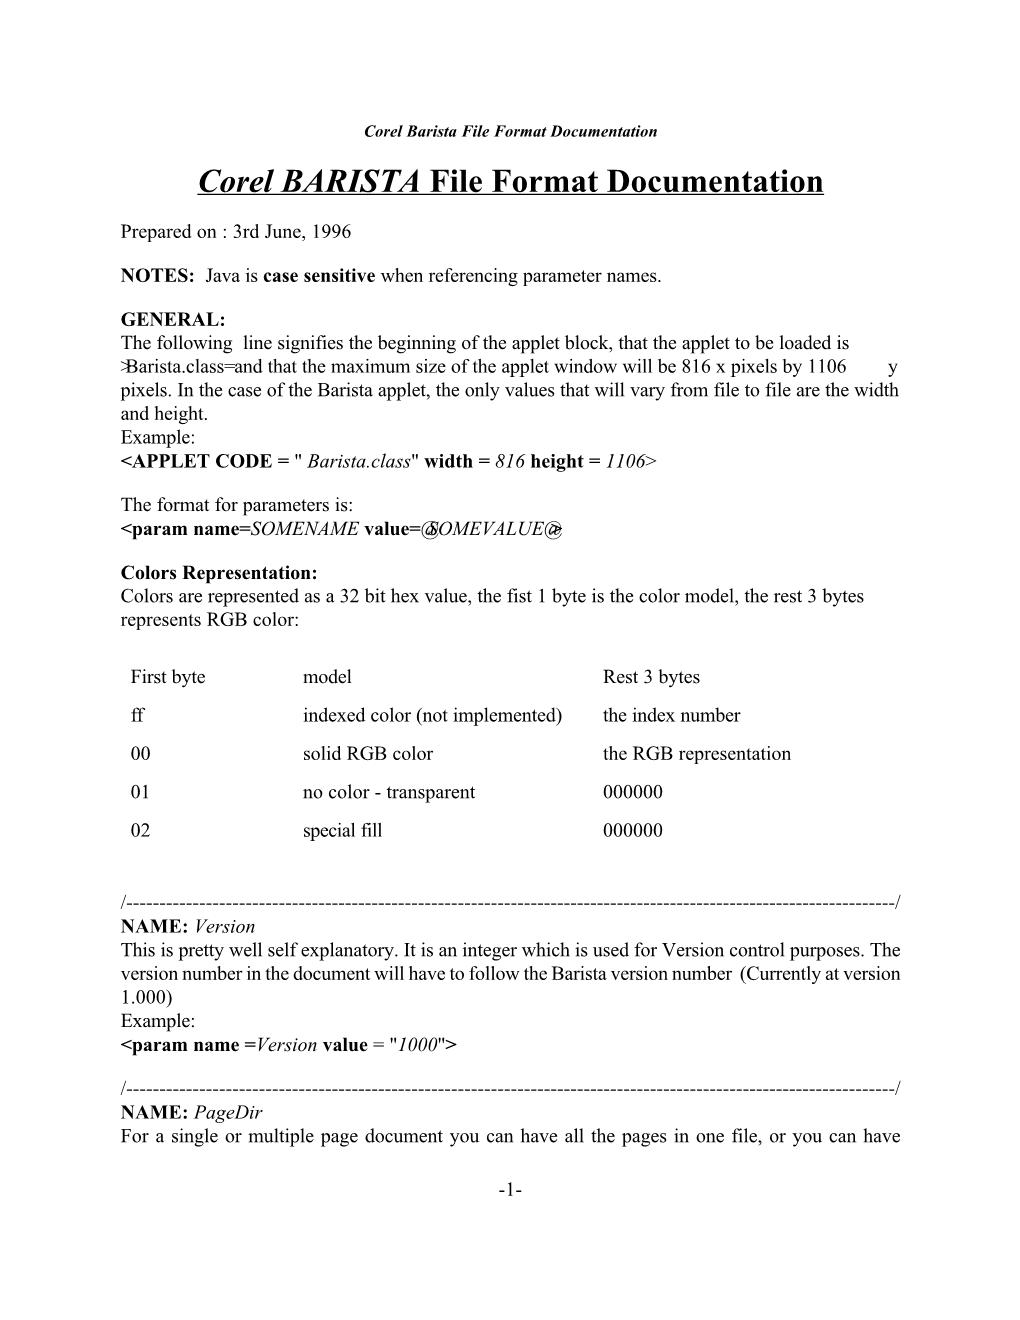 Barista File Format Documentation Corel BARISTA File Format Documentation